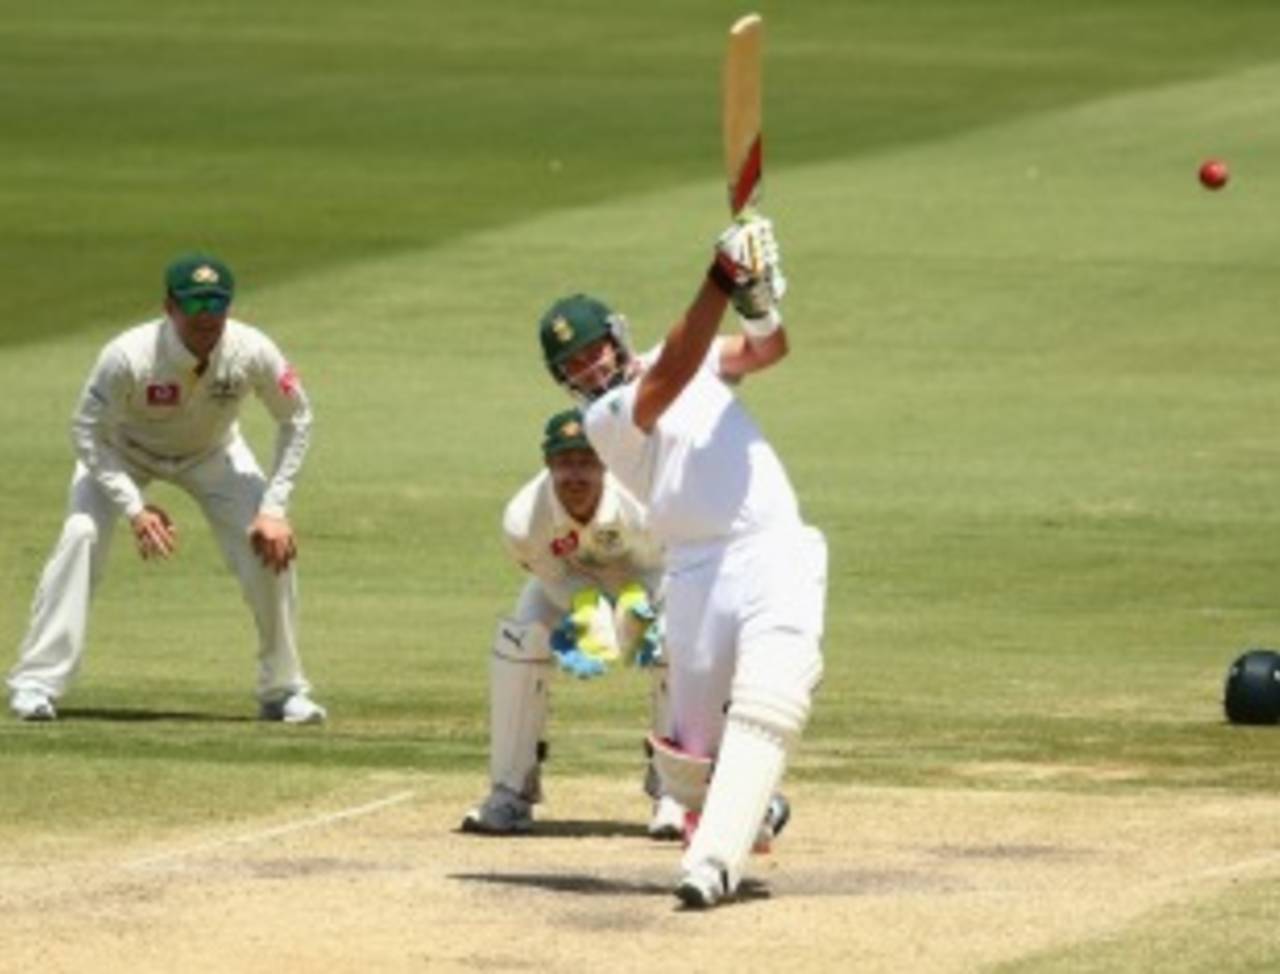 Jacques Kallis hits over the leg side, Australia v South Africa, 2nd Test, Adelaide, 5th day, November 26, 2012